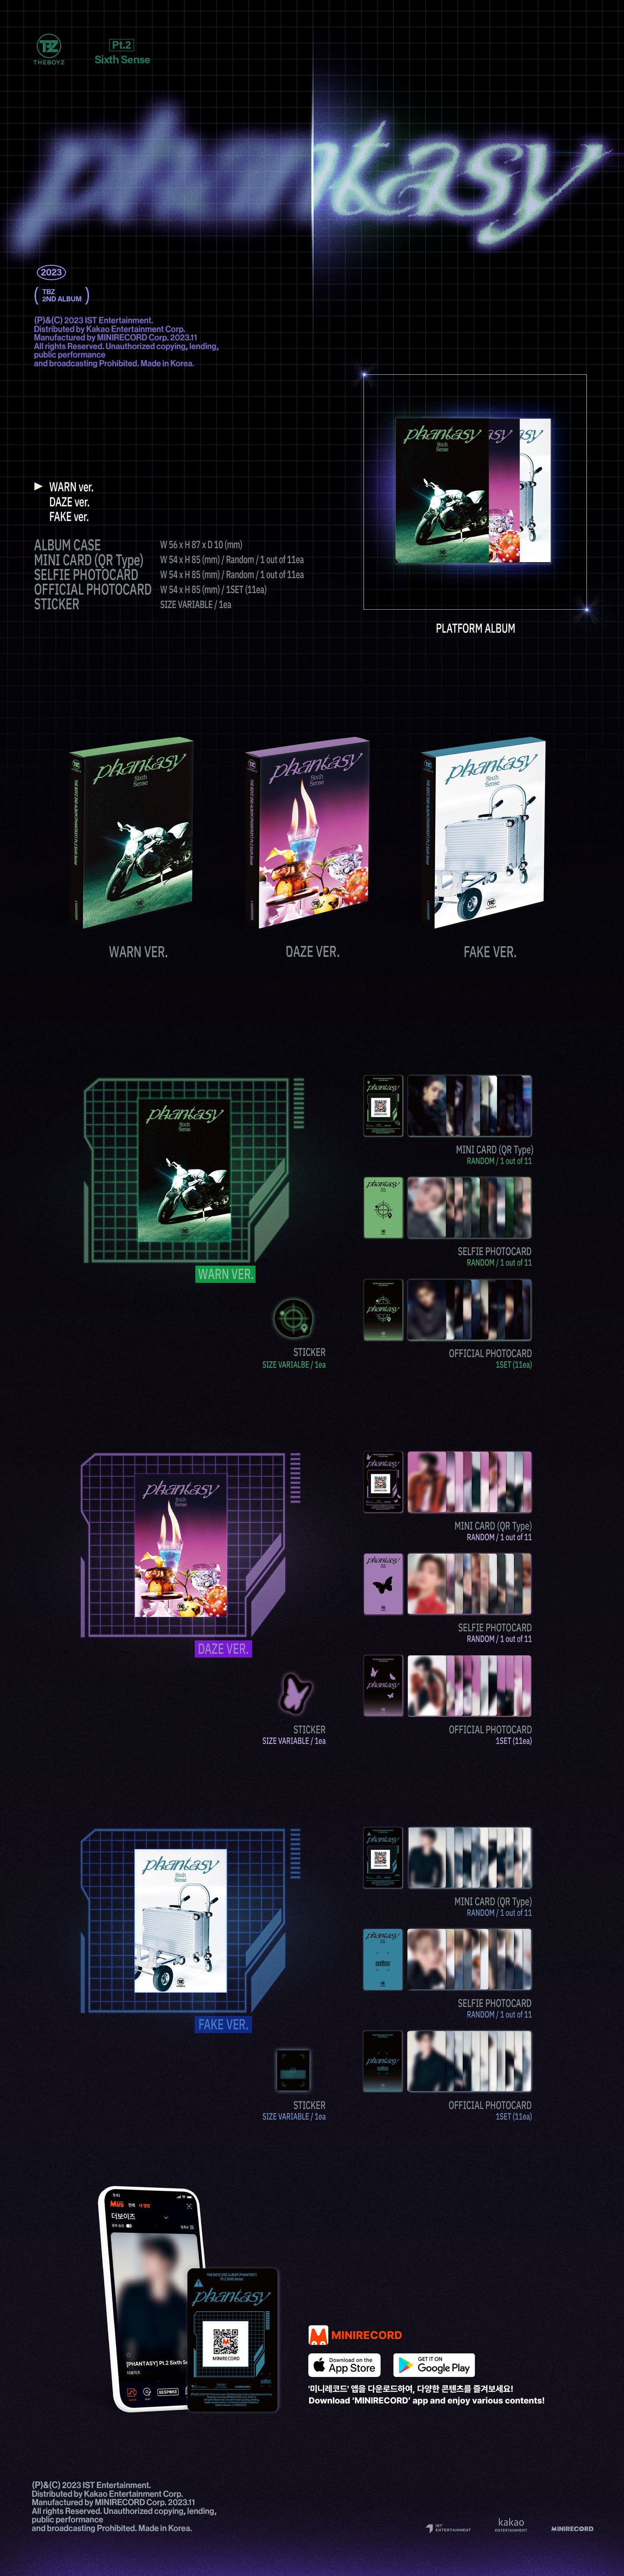 THE BOYZ - 2nd Album 'PHANTASY Part. 2 Sixth Sense' (Platform Version)